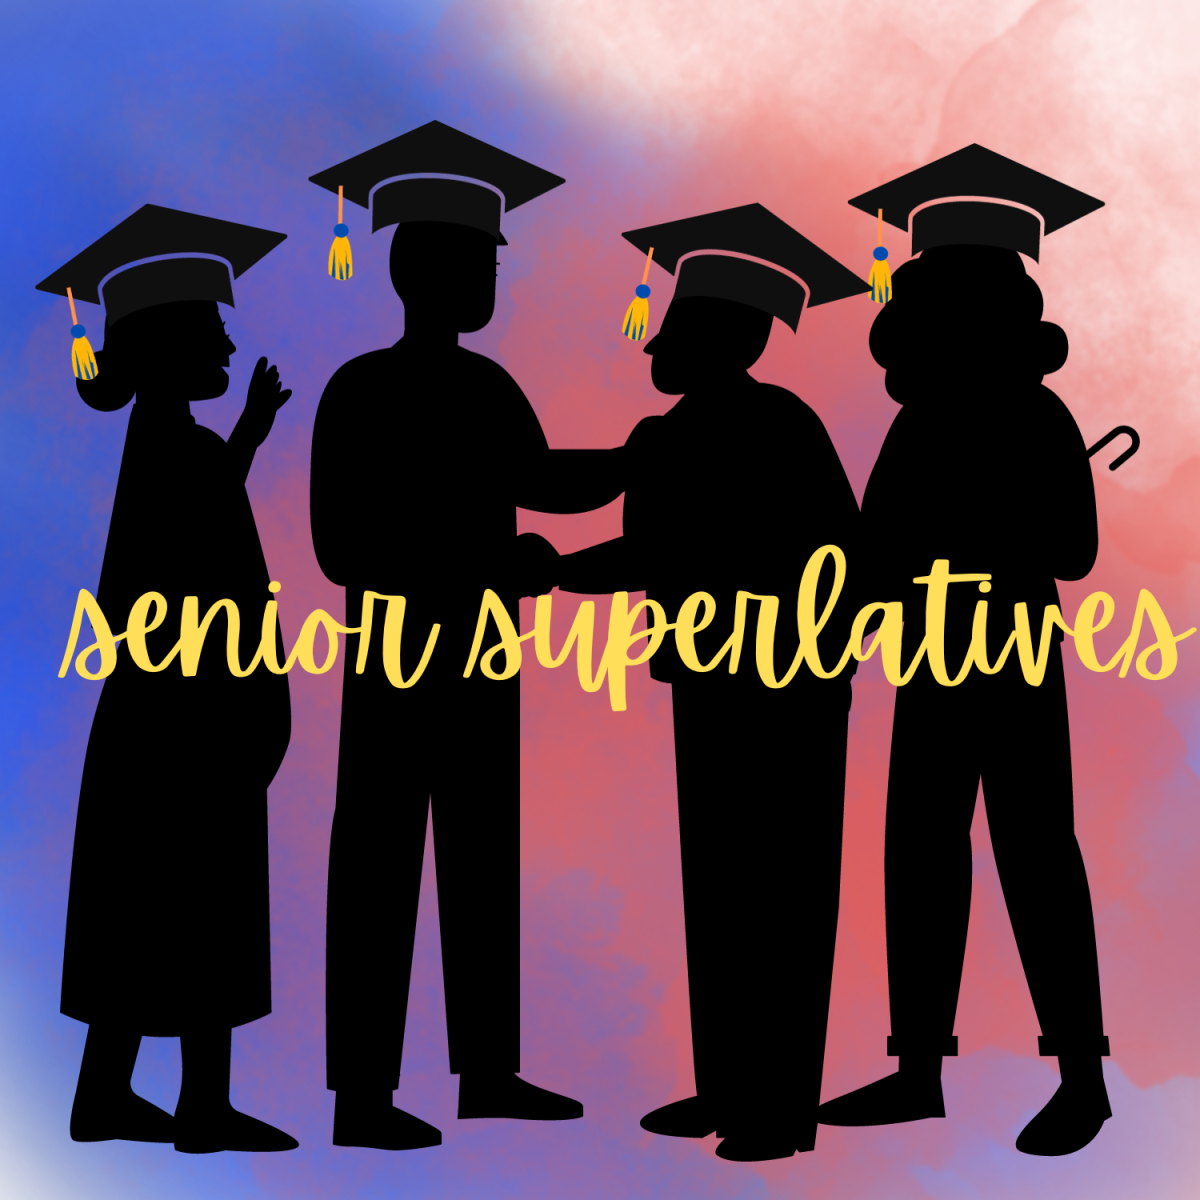 The+Culture+of+Senior+Superlatives